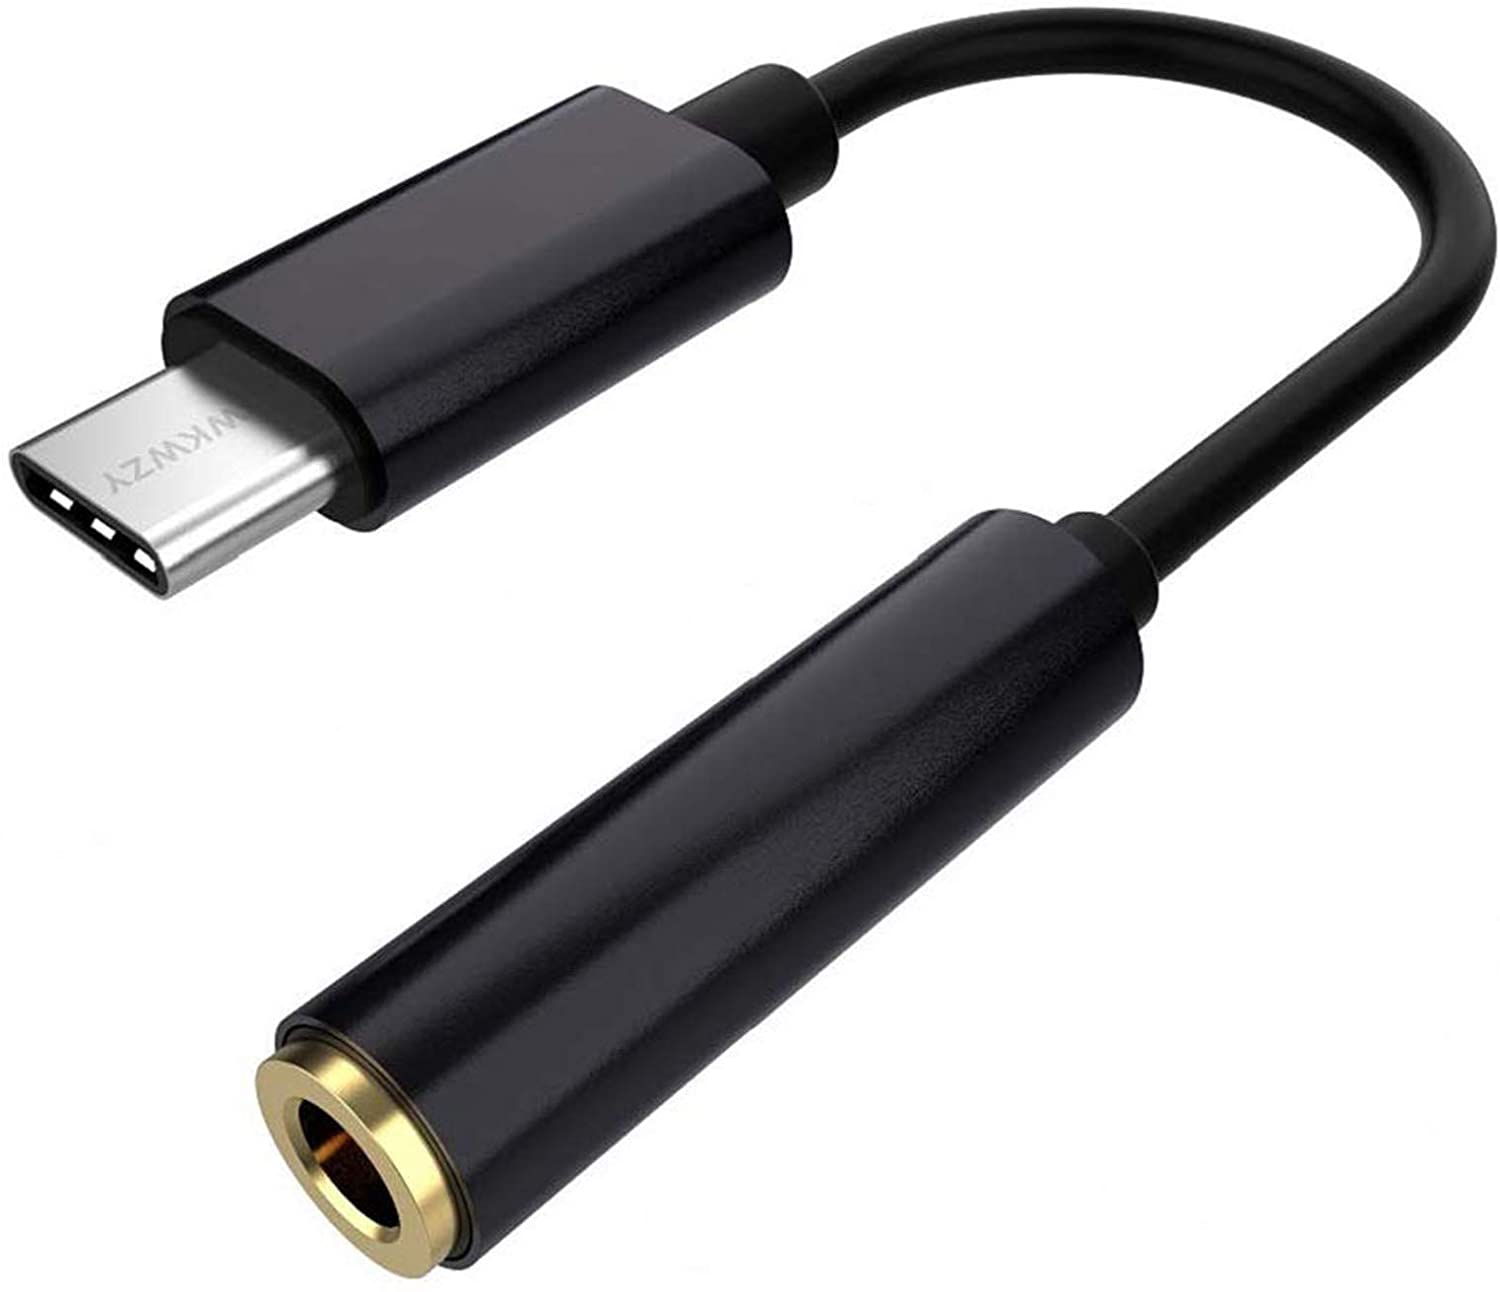 USB-C DAC يعد بصوت عالي الدقة للهواتف